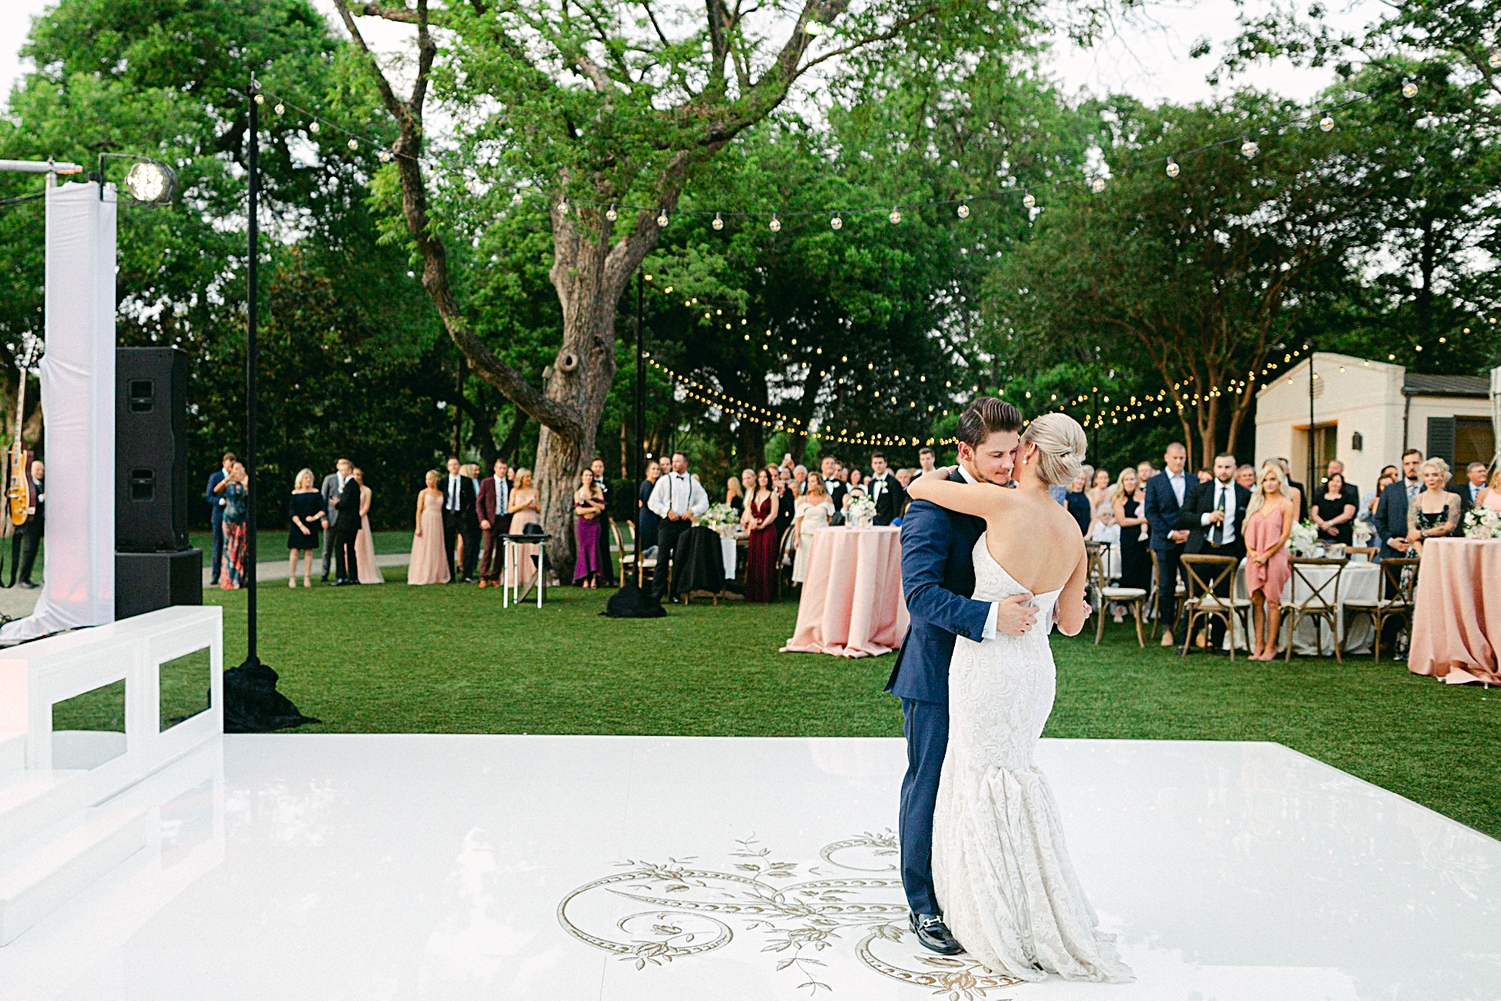 Bride and groom dancing on white outdoor dance floor Dallas Arboretum wedding garden reception